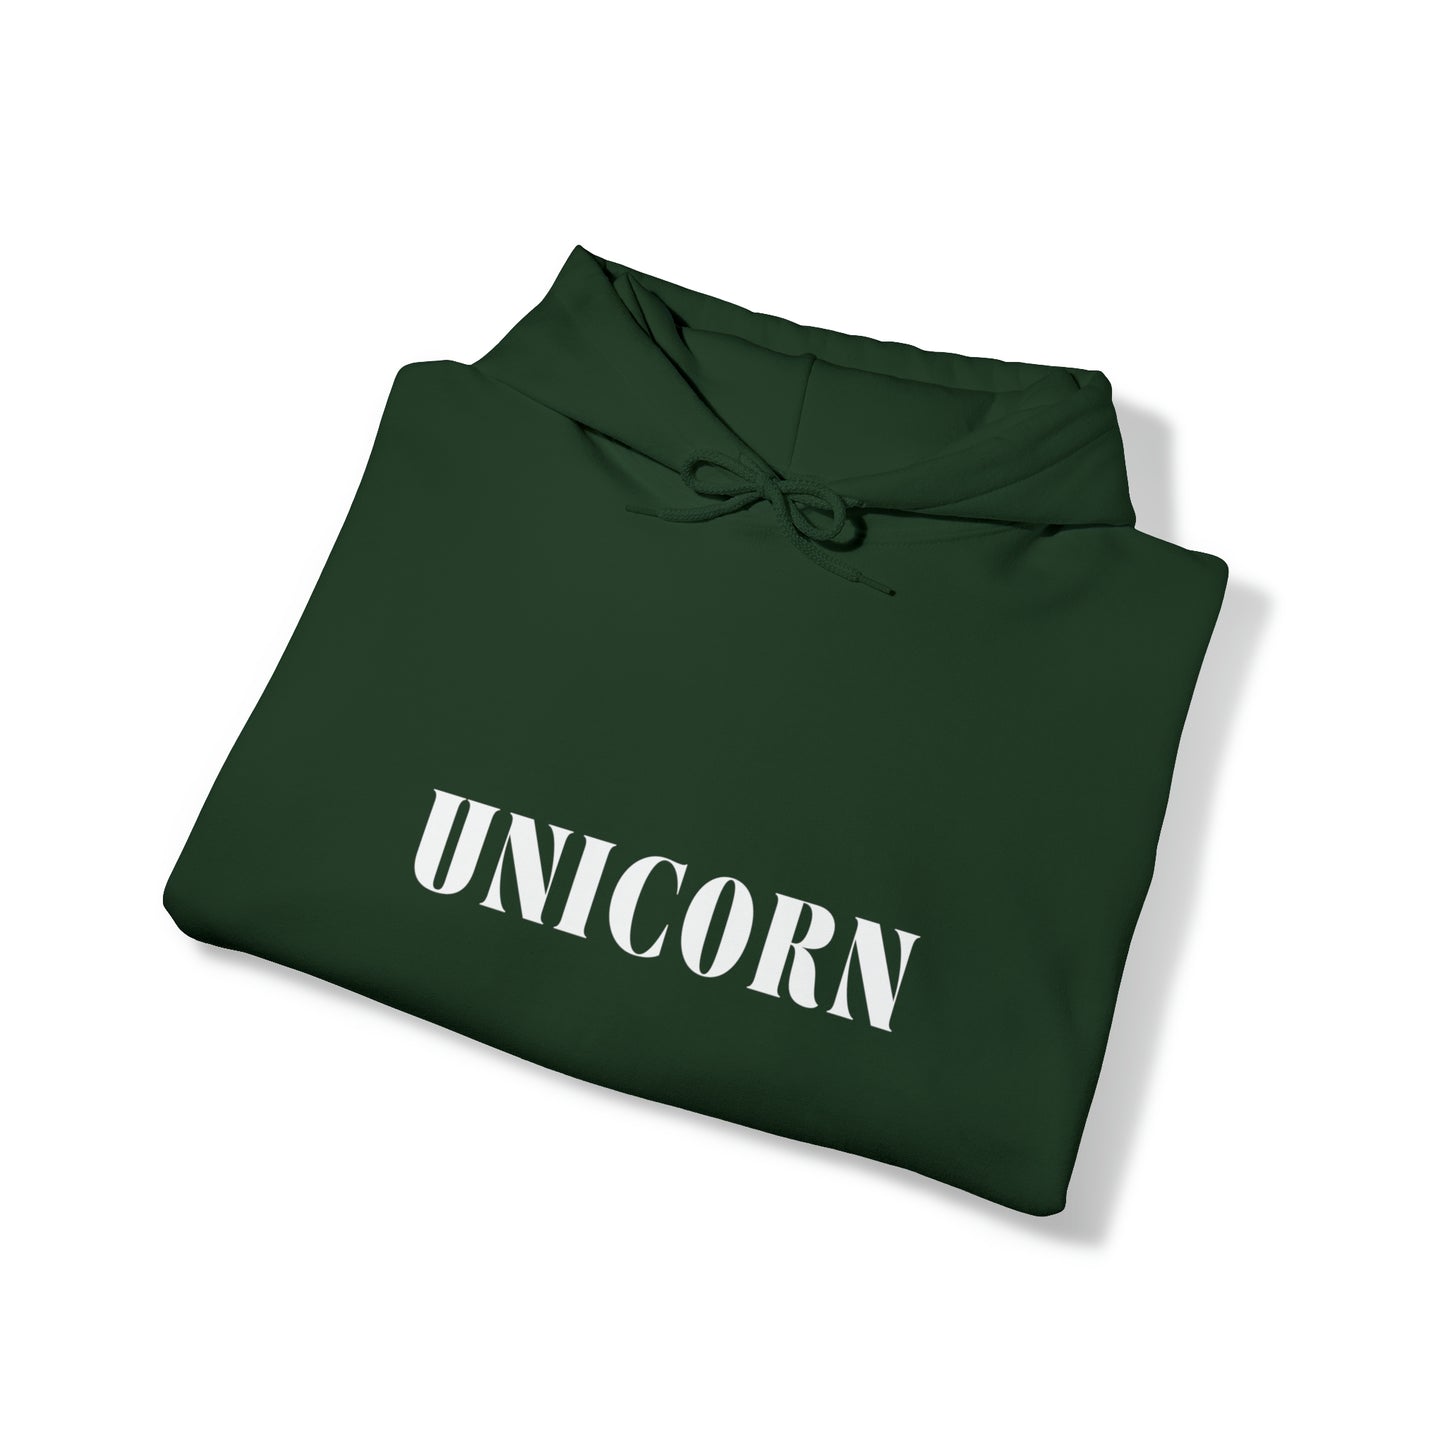   Unicorn Hoodie from HoodySZN.com